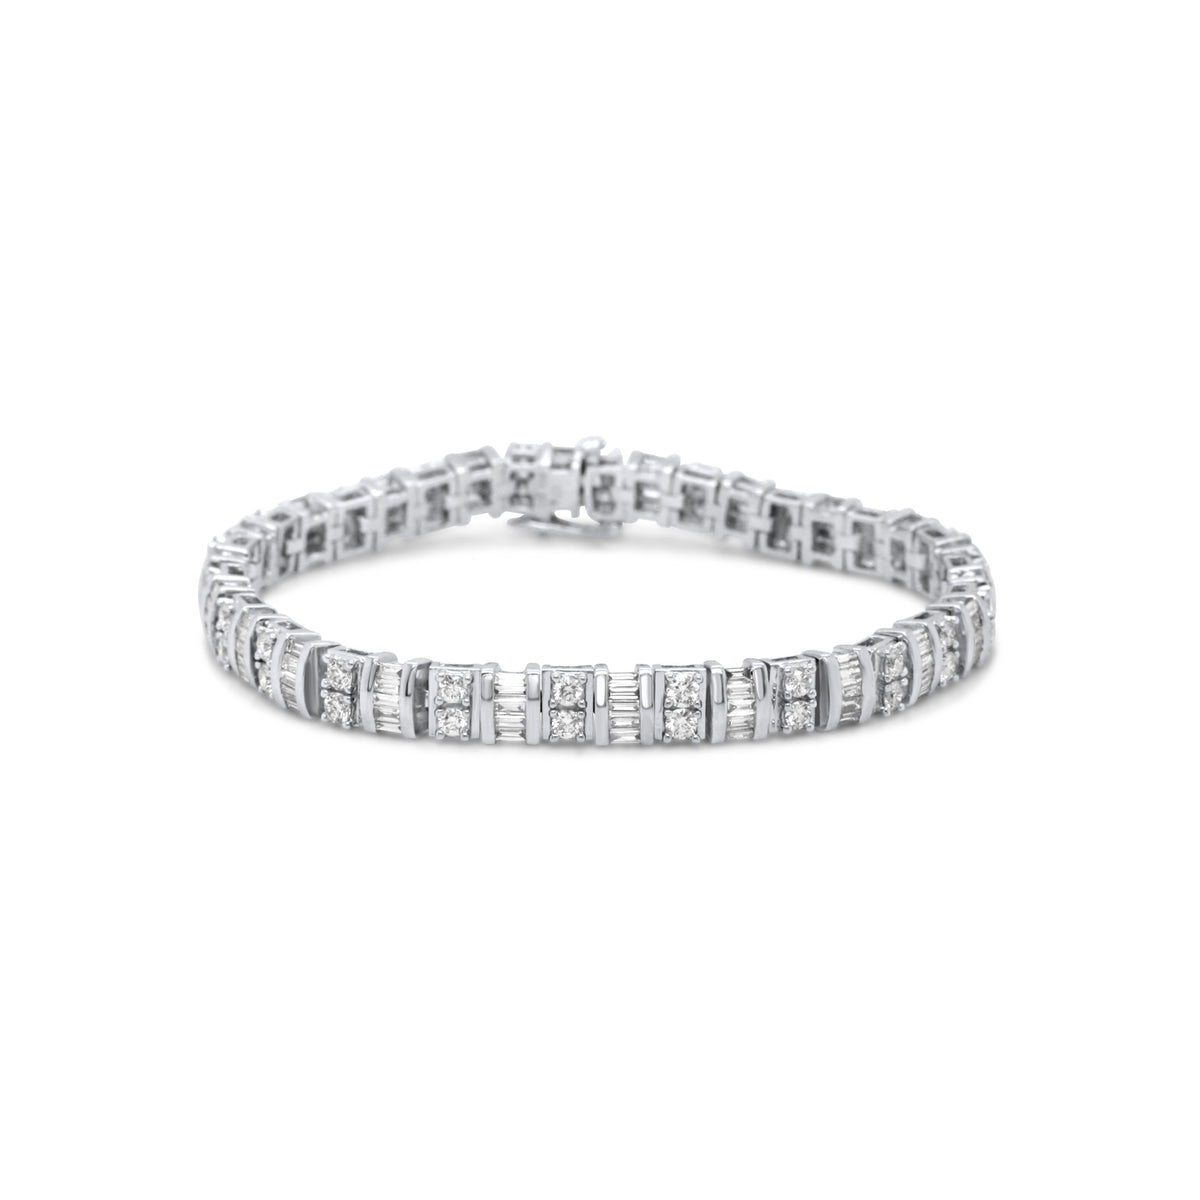 14k white gold estate diamond bar set tennis bracelet